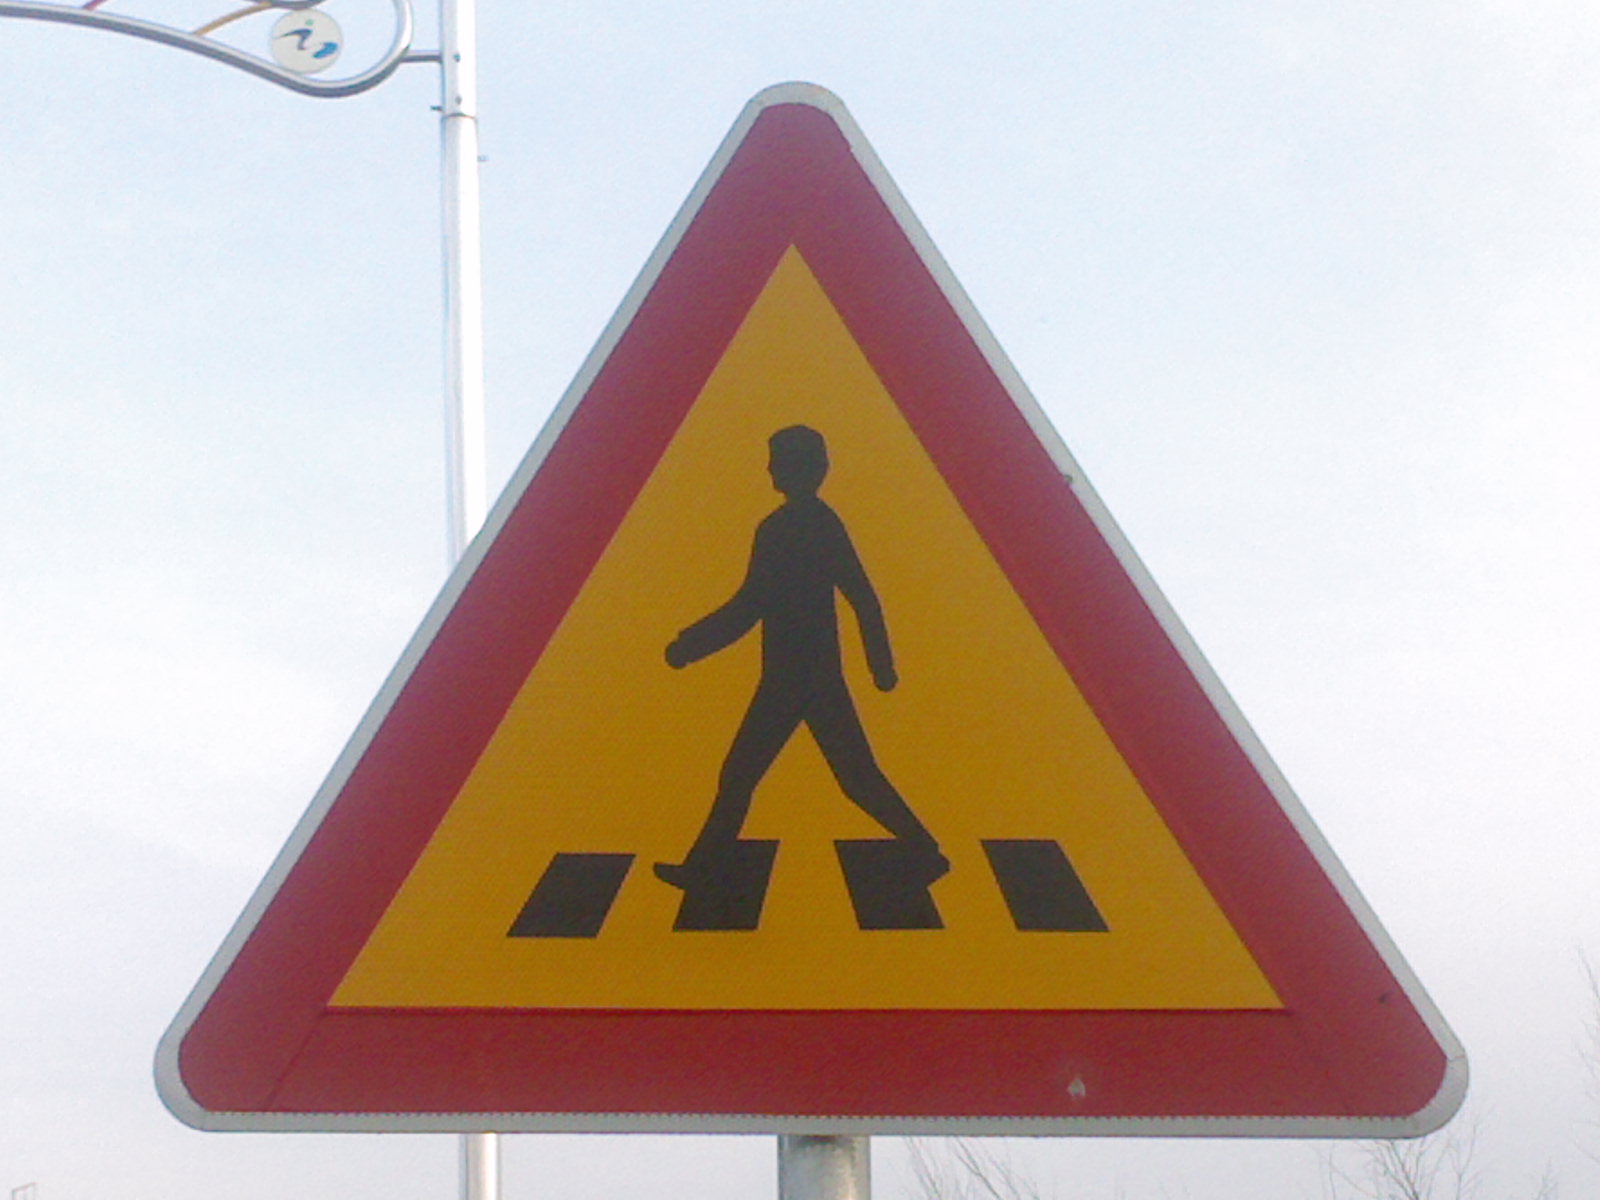 Pedestrian crossing - Wikipedia